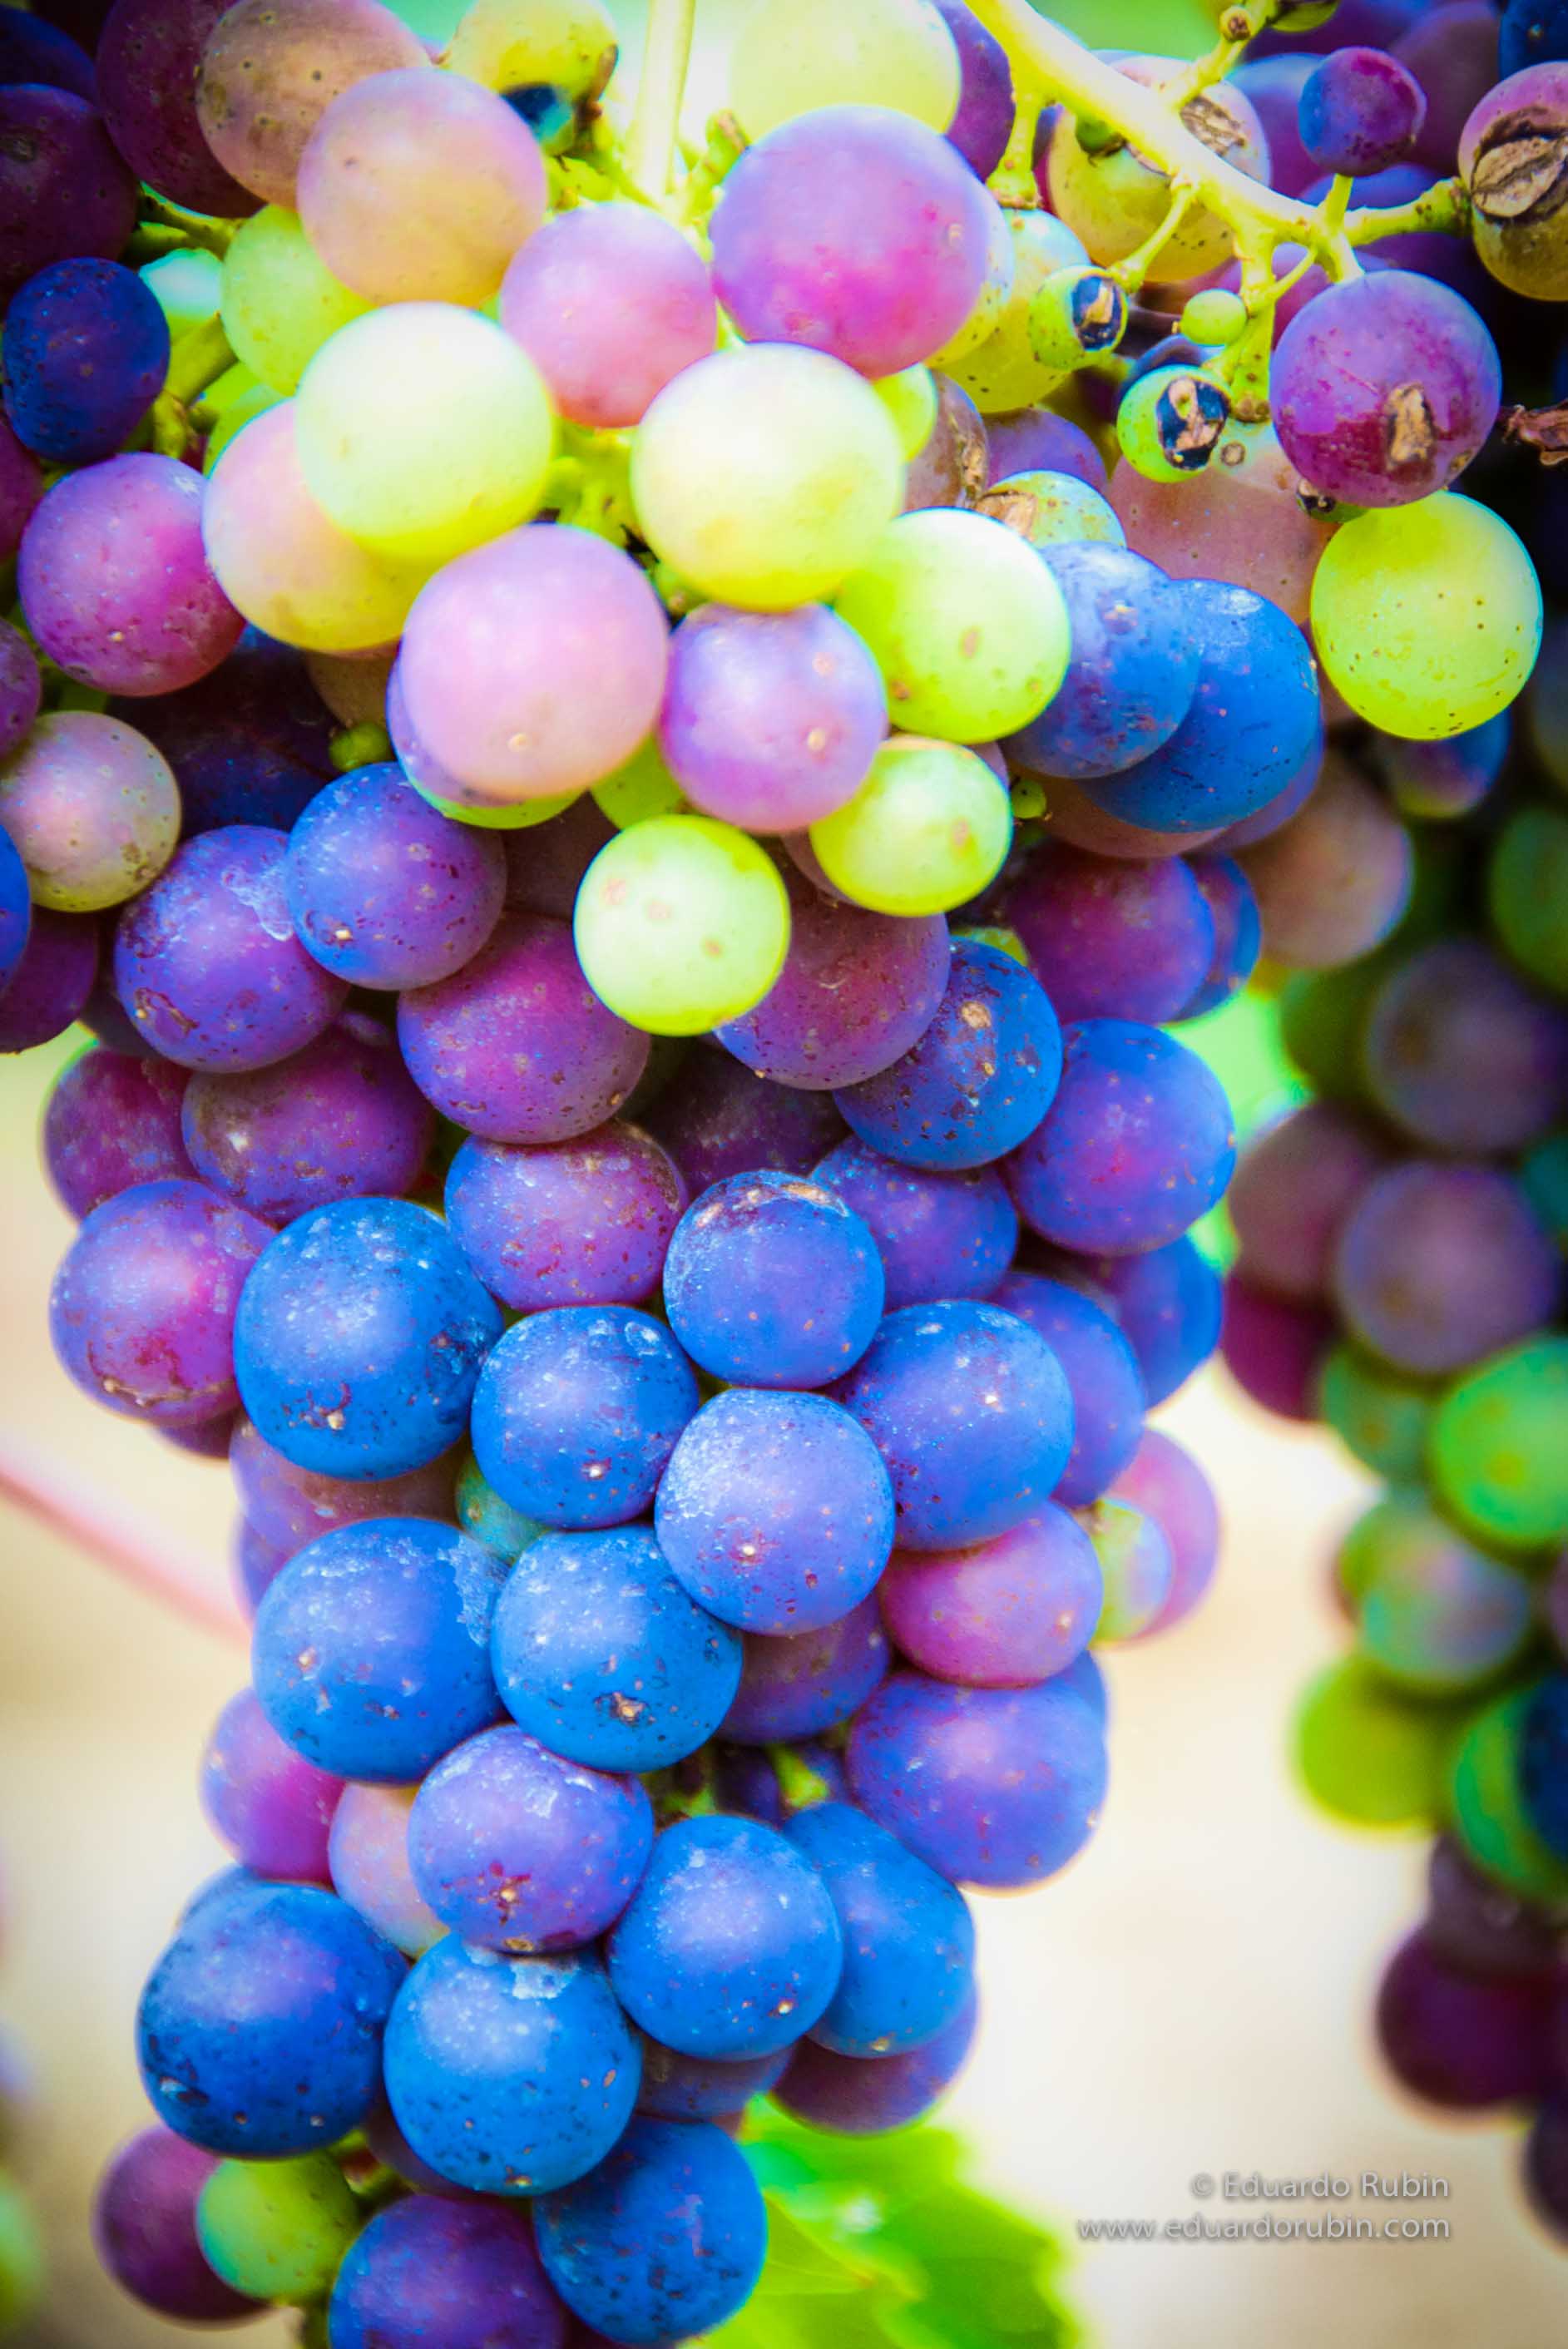 Tuscany grapes